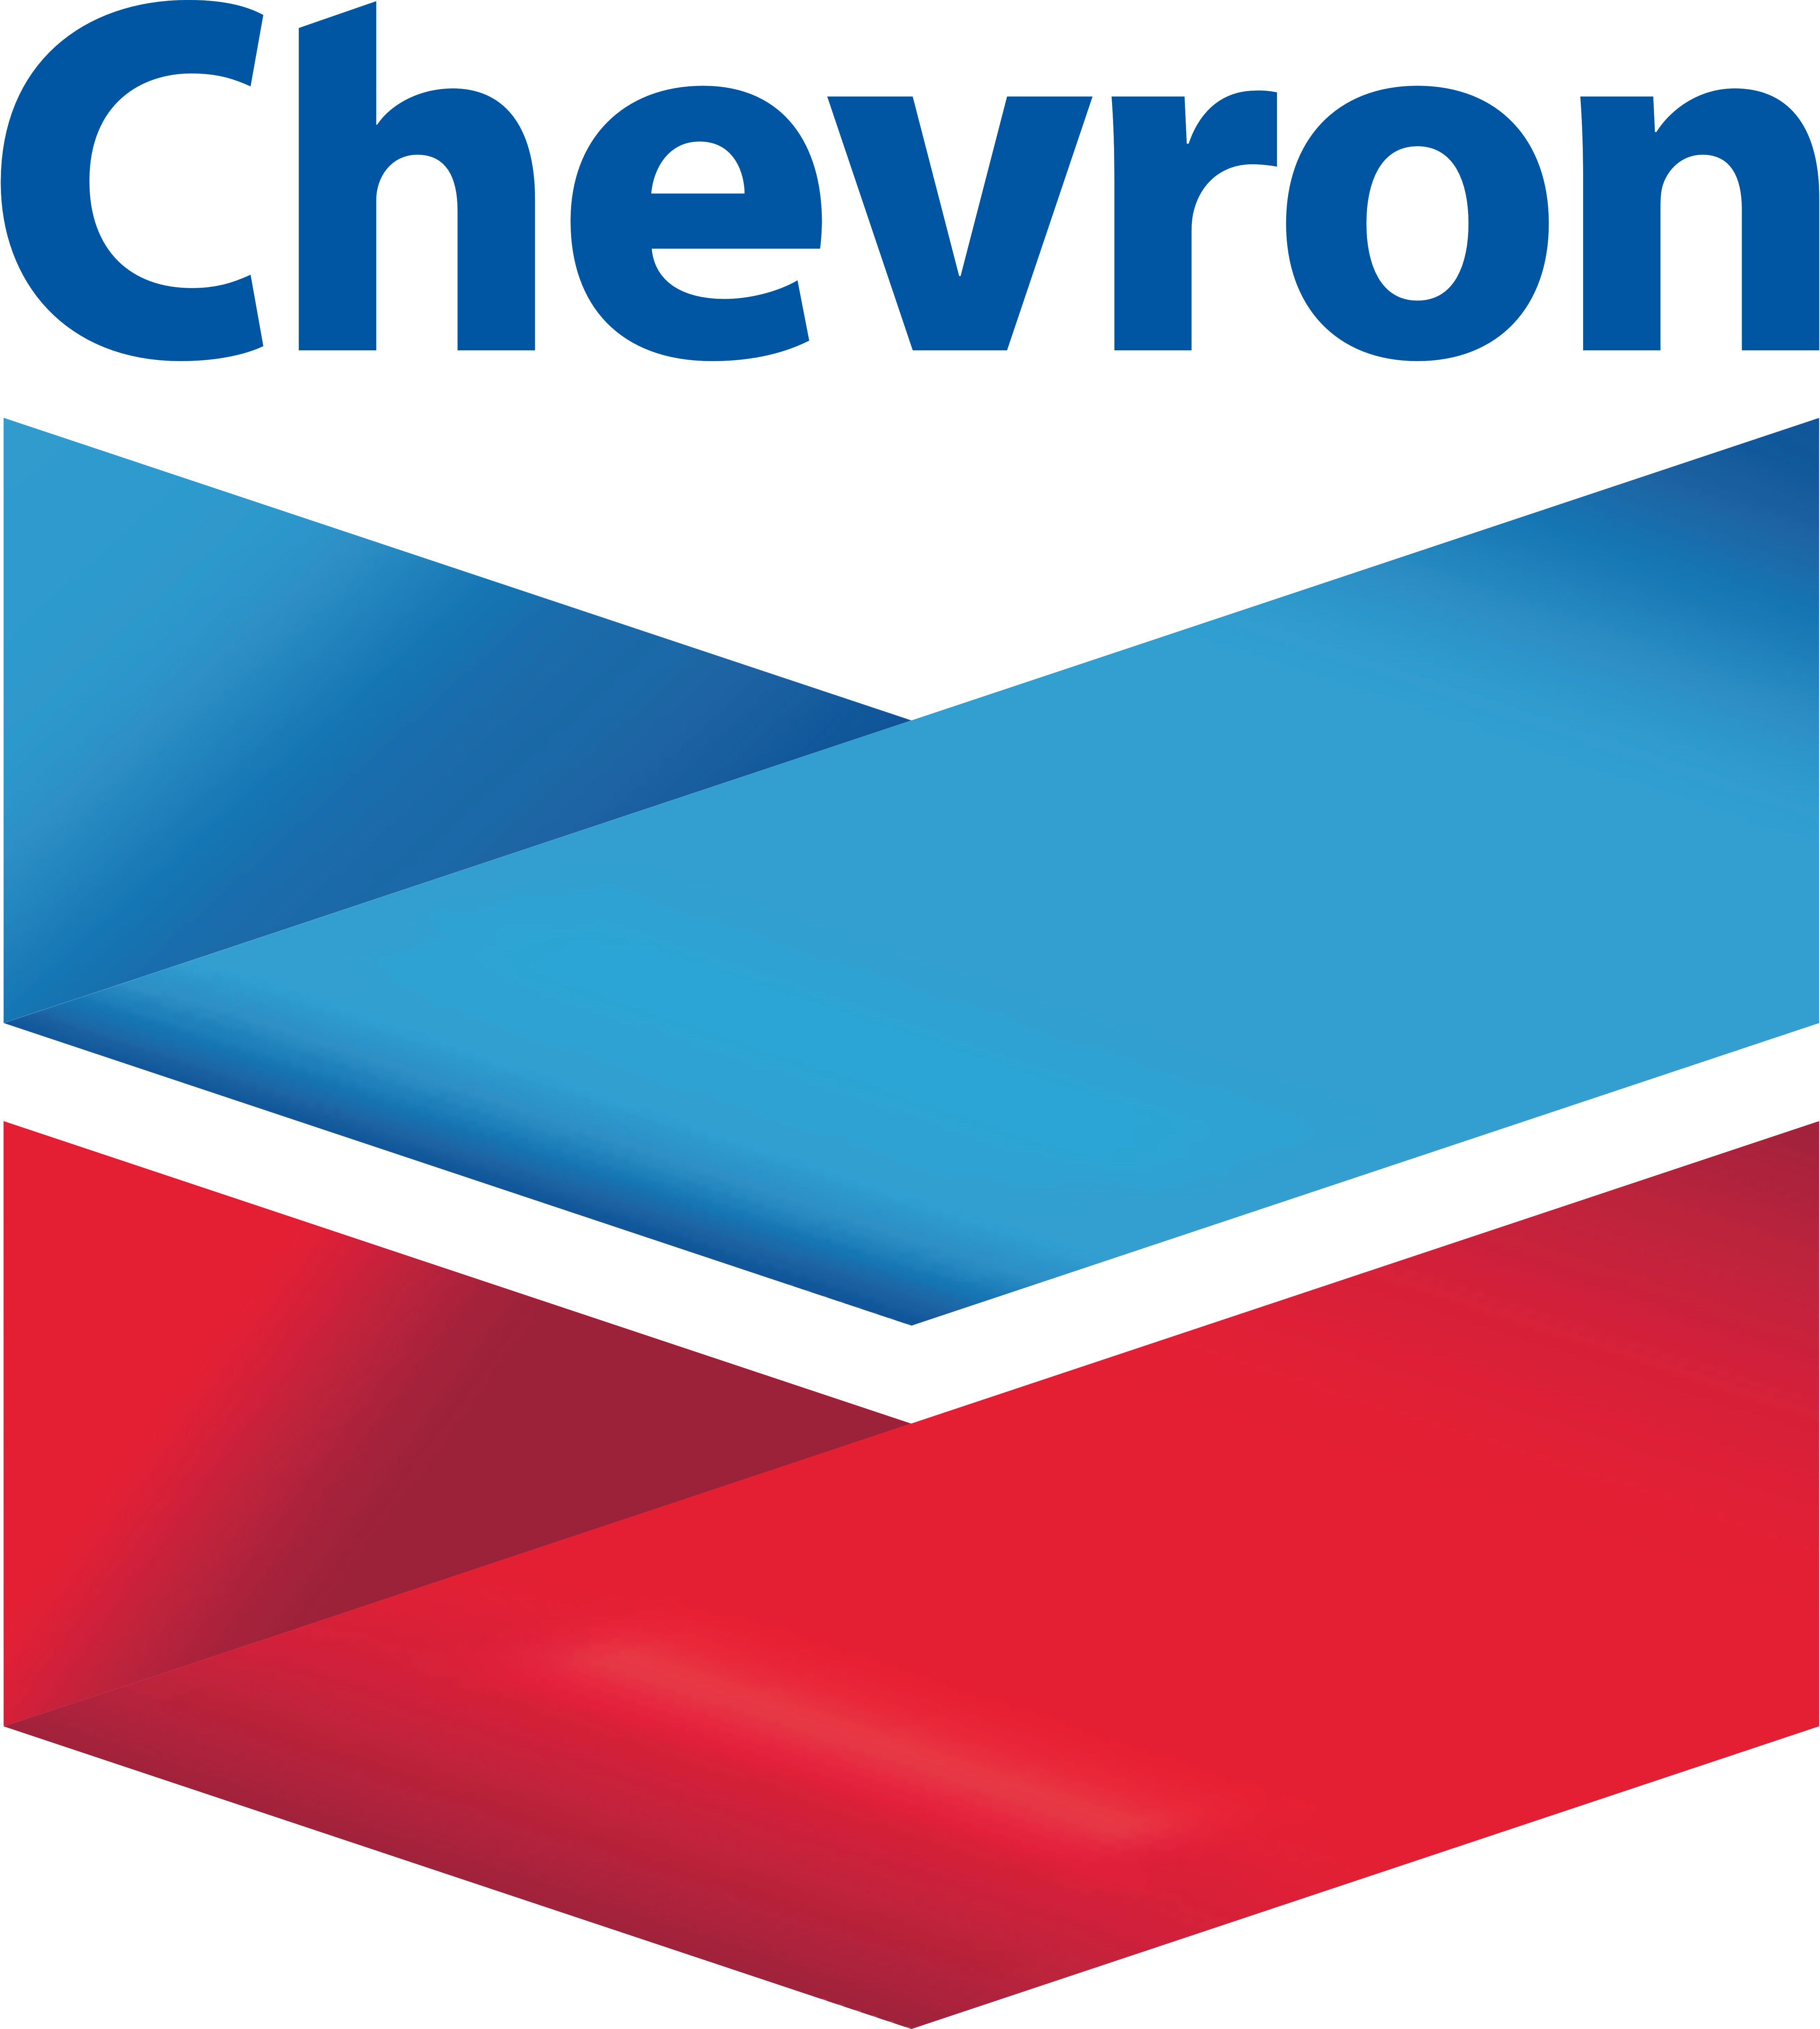 Chevron Logos Download